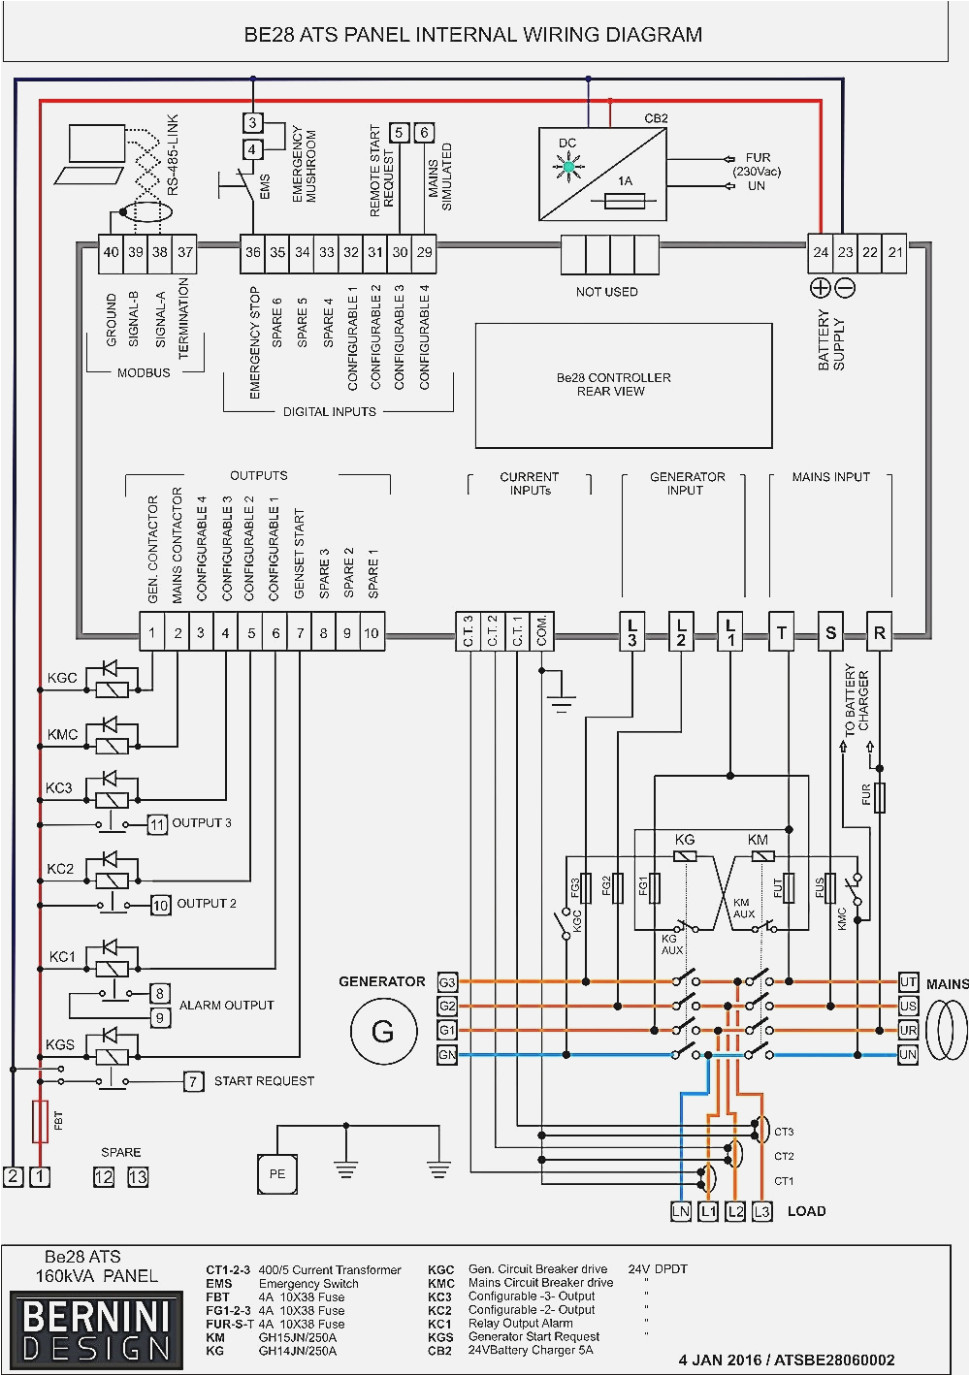 asco ats wiring diagram schema diagram database asco ats wiring diagram